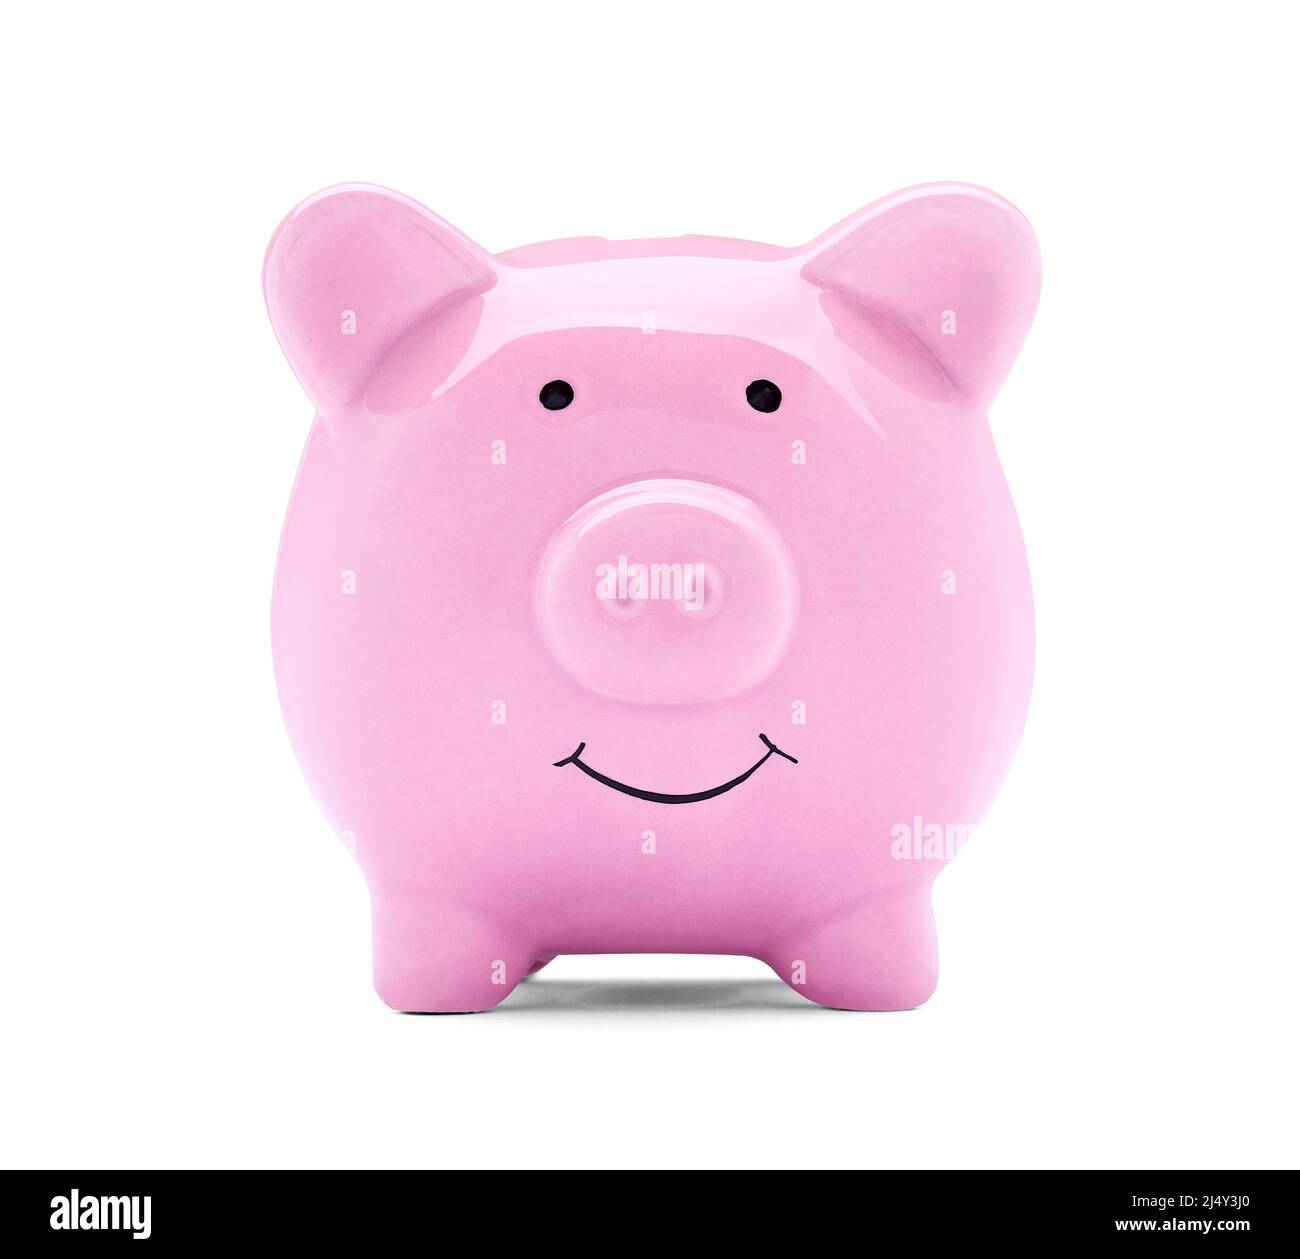 coin finance saving money piggybank business investment banking piggy bank pig recession crisis sad Stock Photo